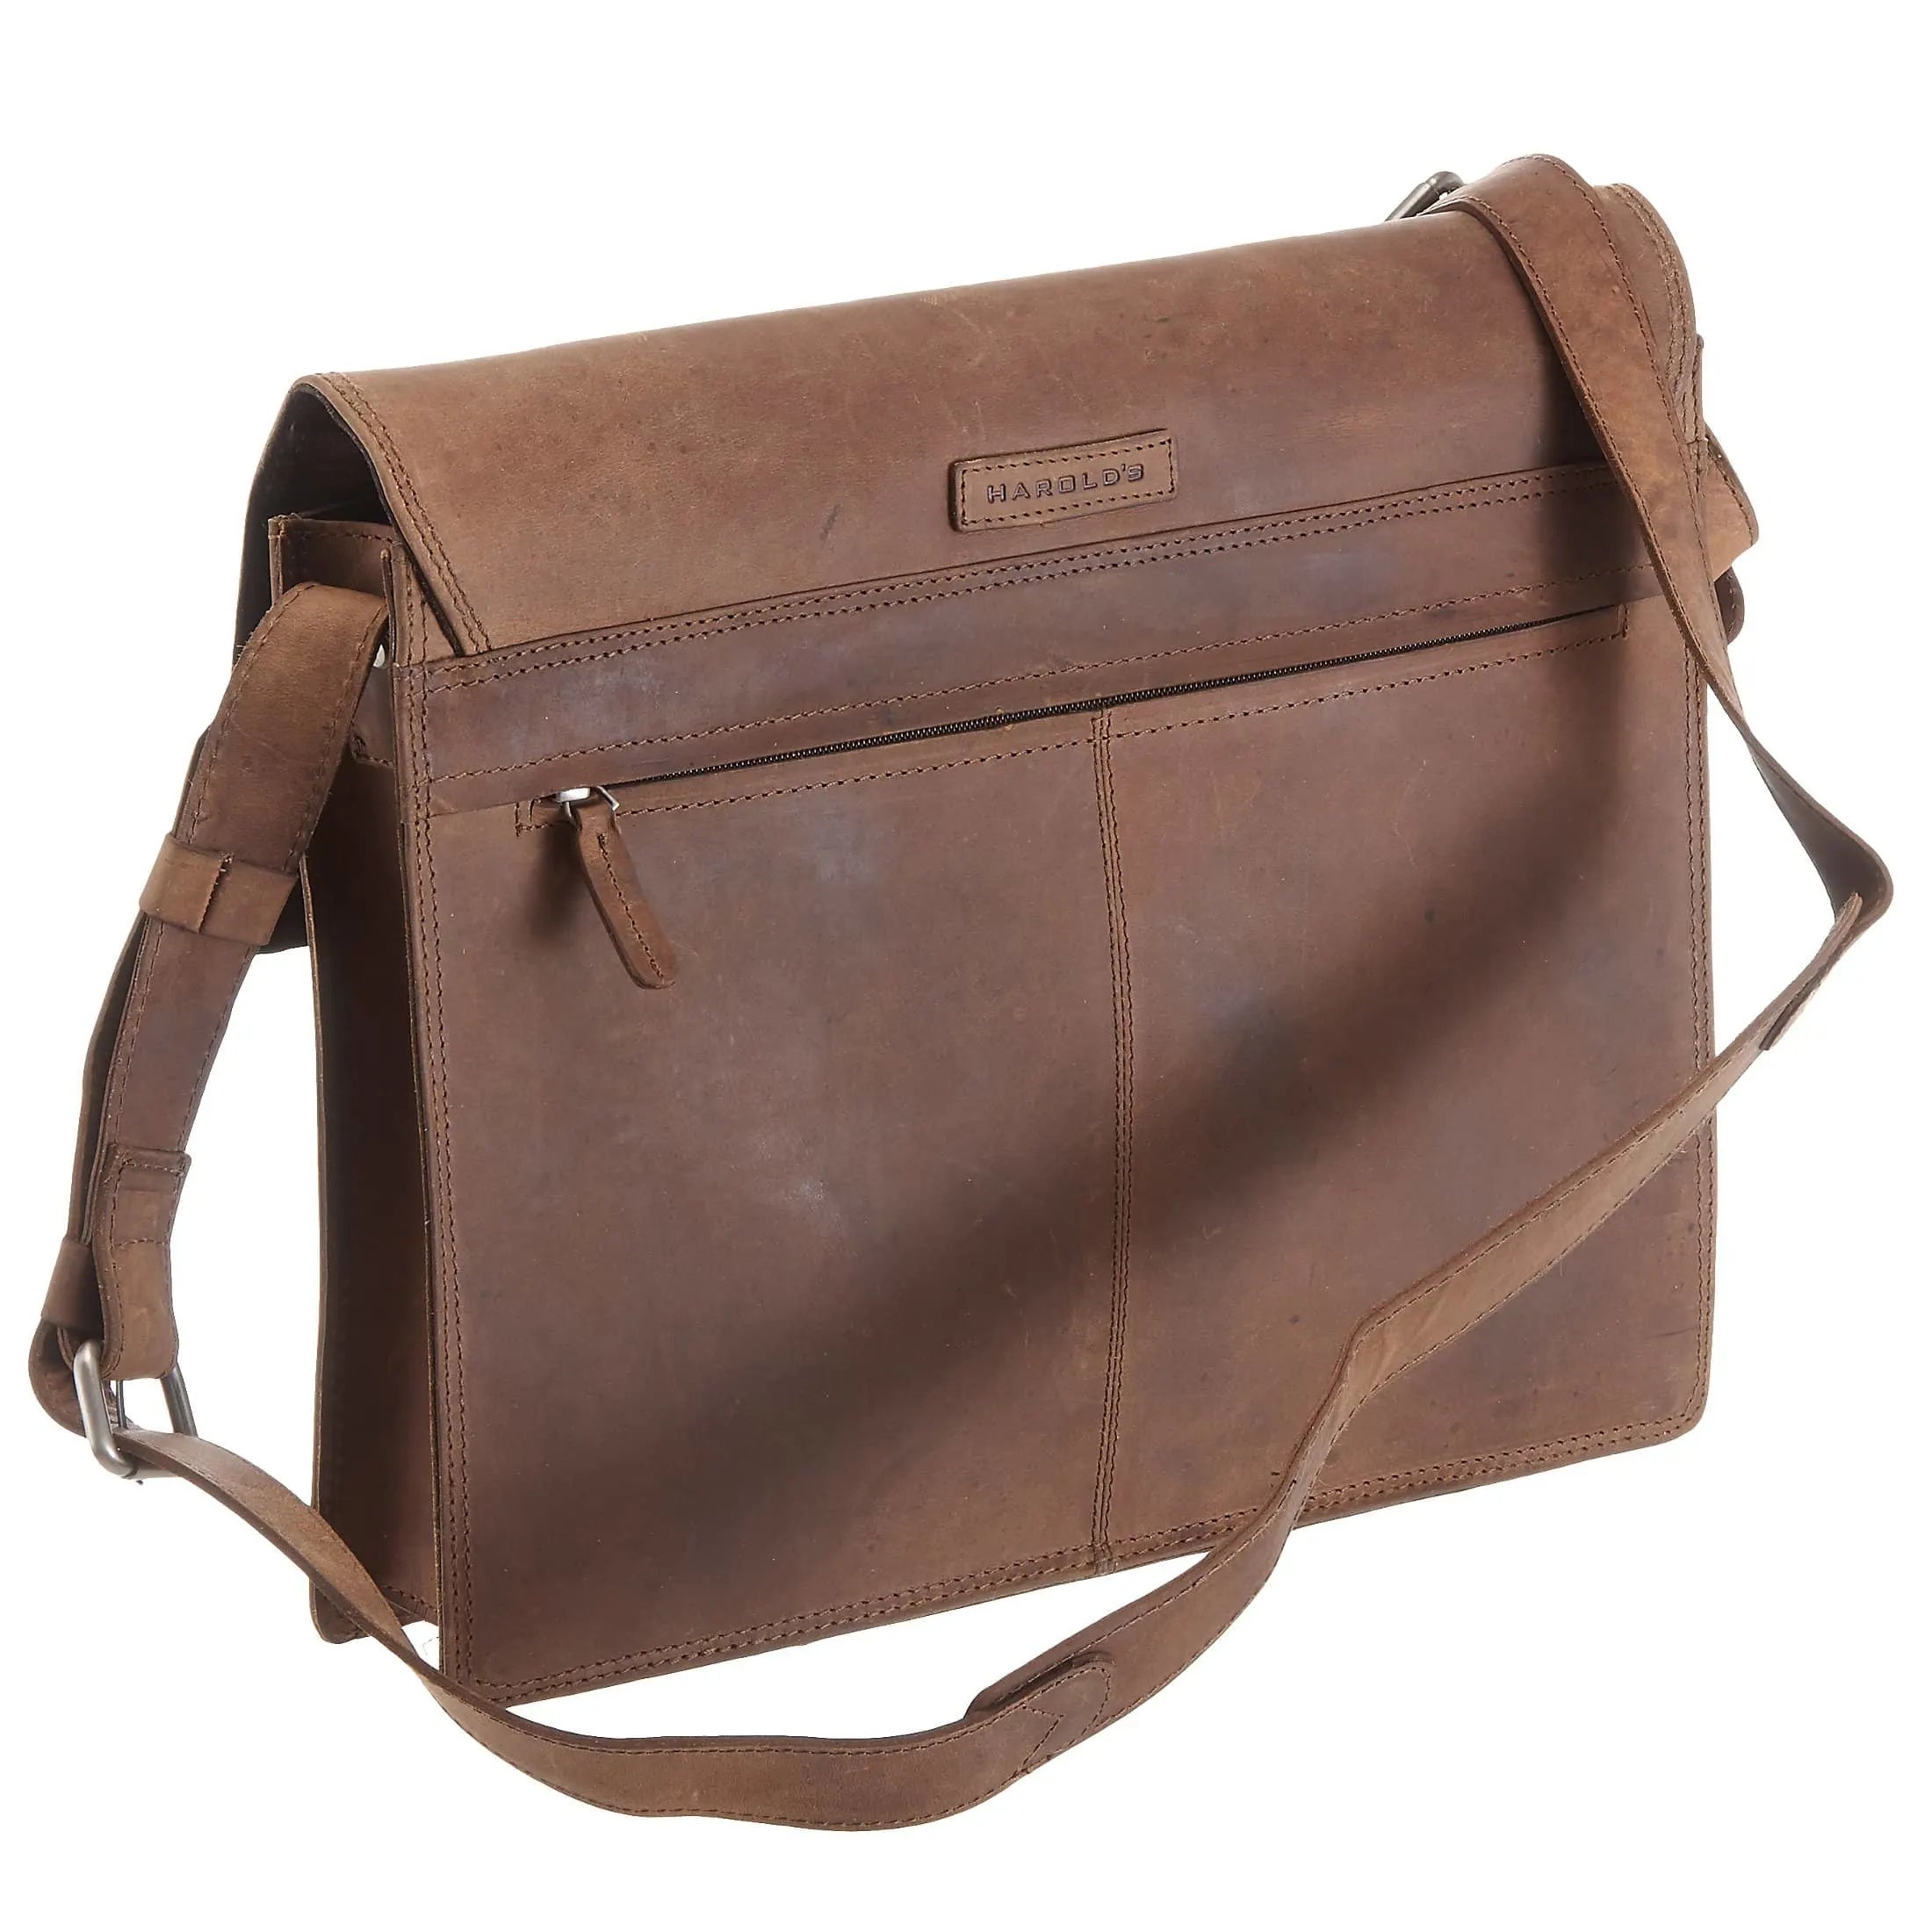 Harolds Antik messenger bag 38 cm - natural